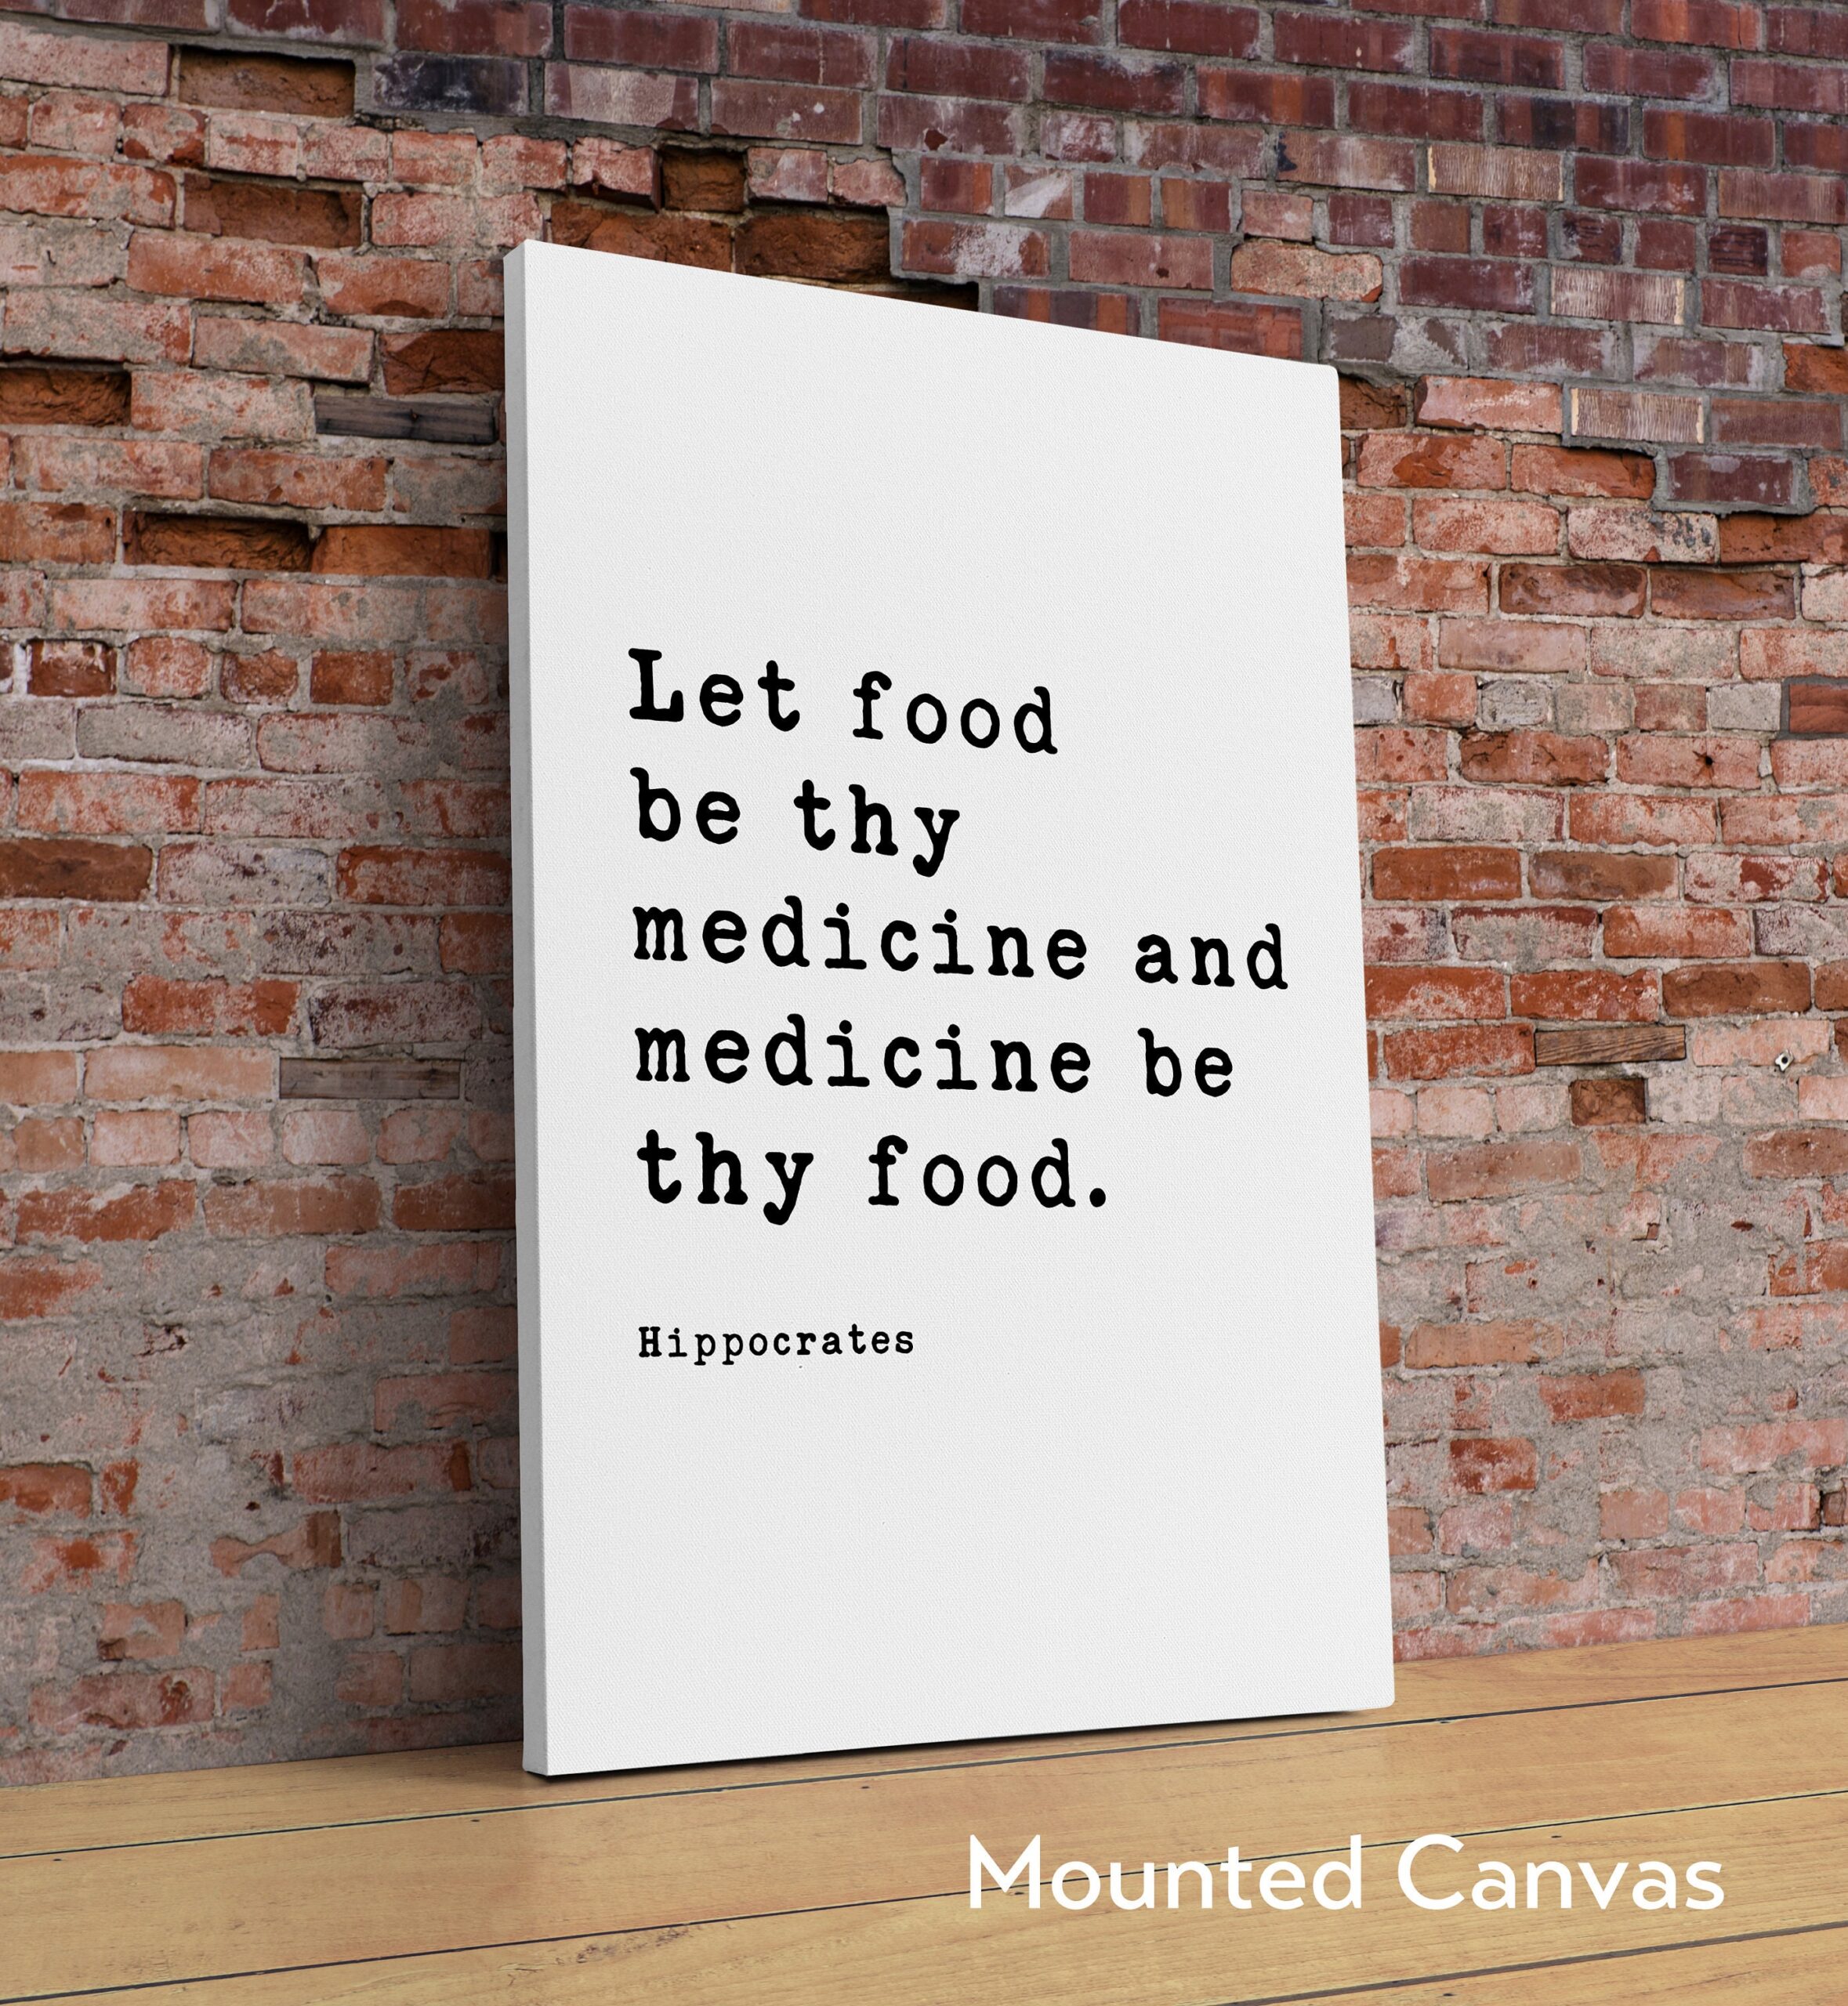 food be thy medicine hippocrates